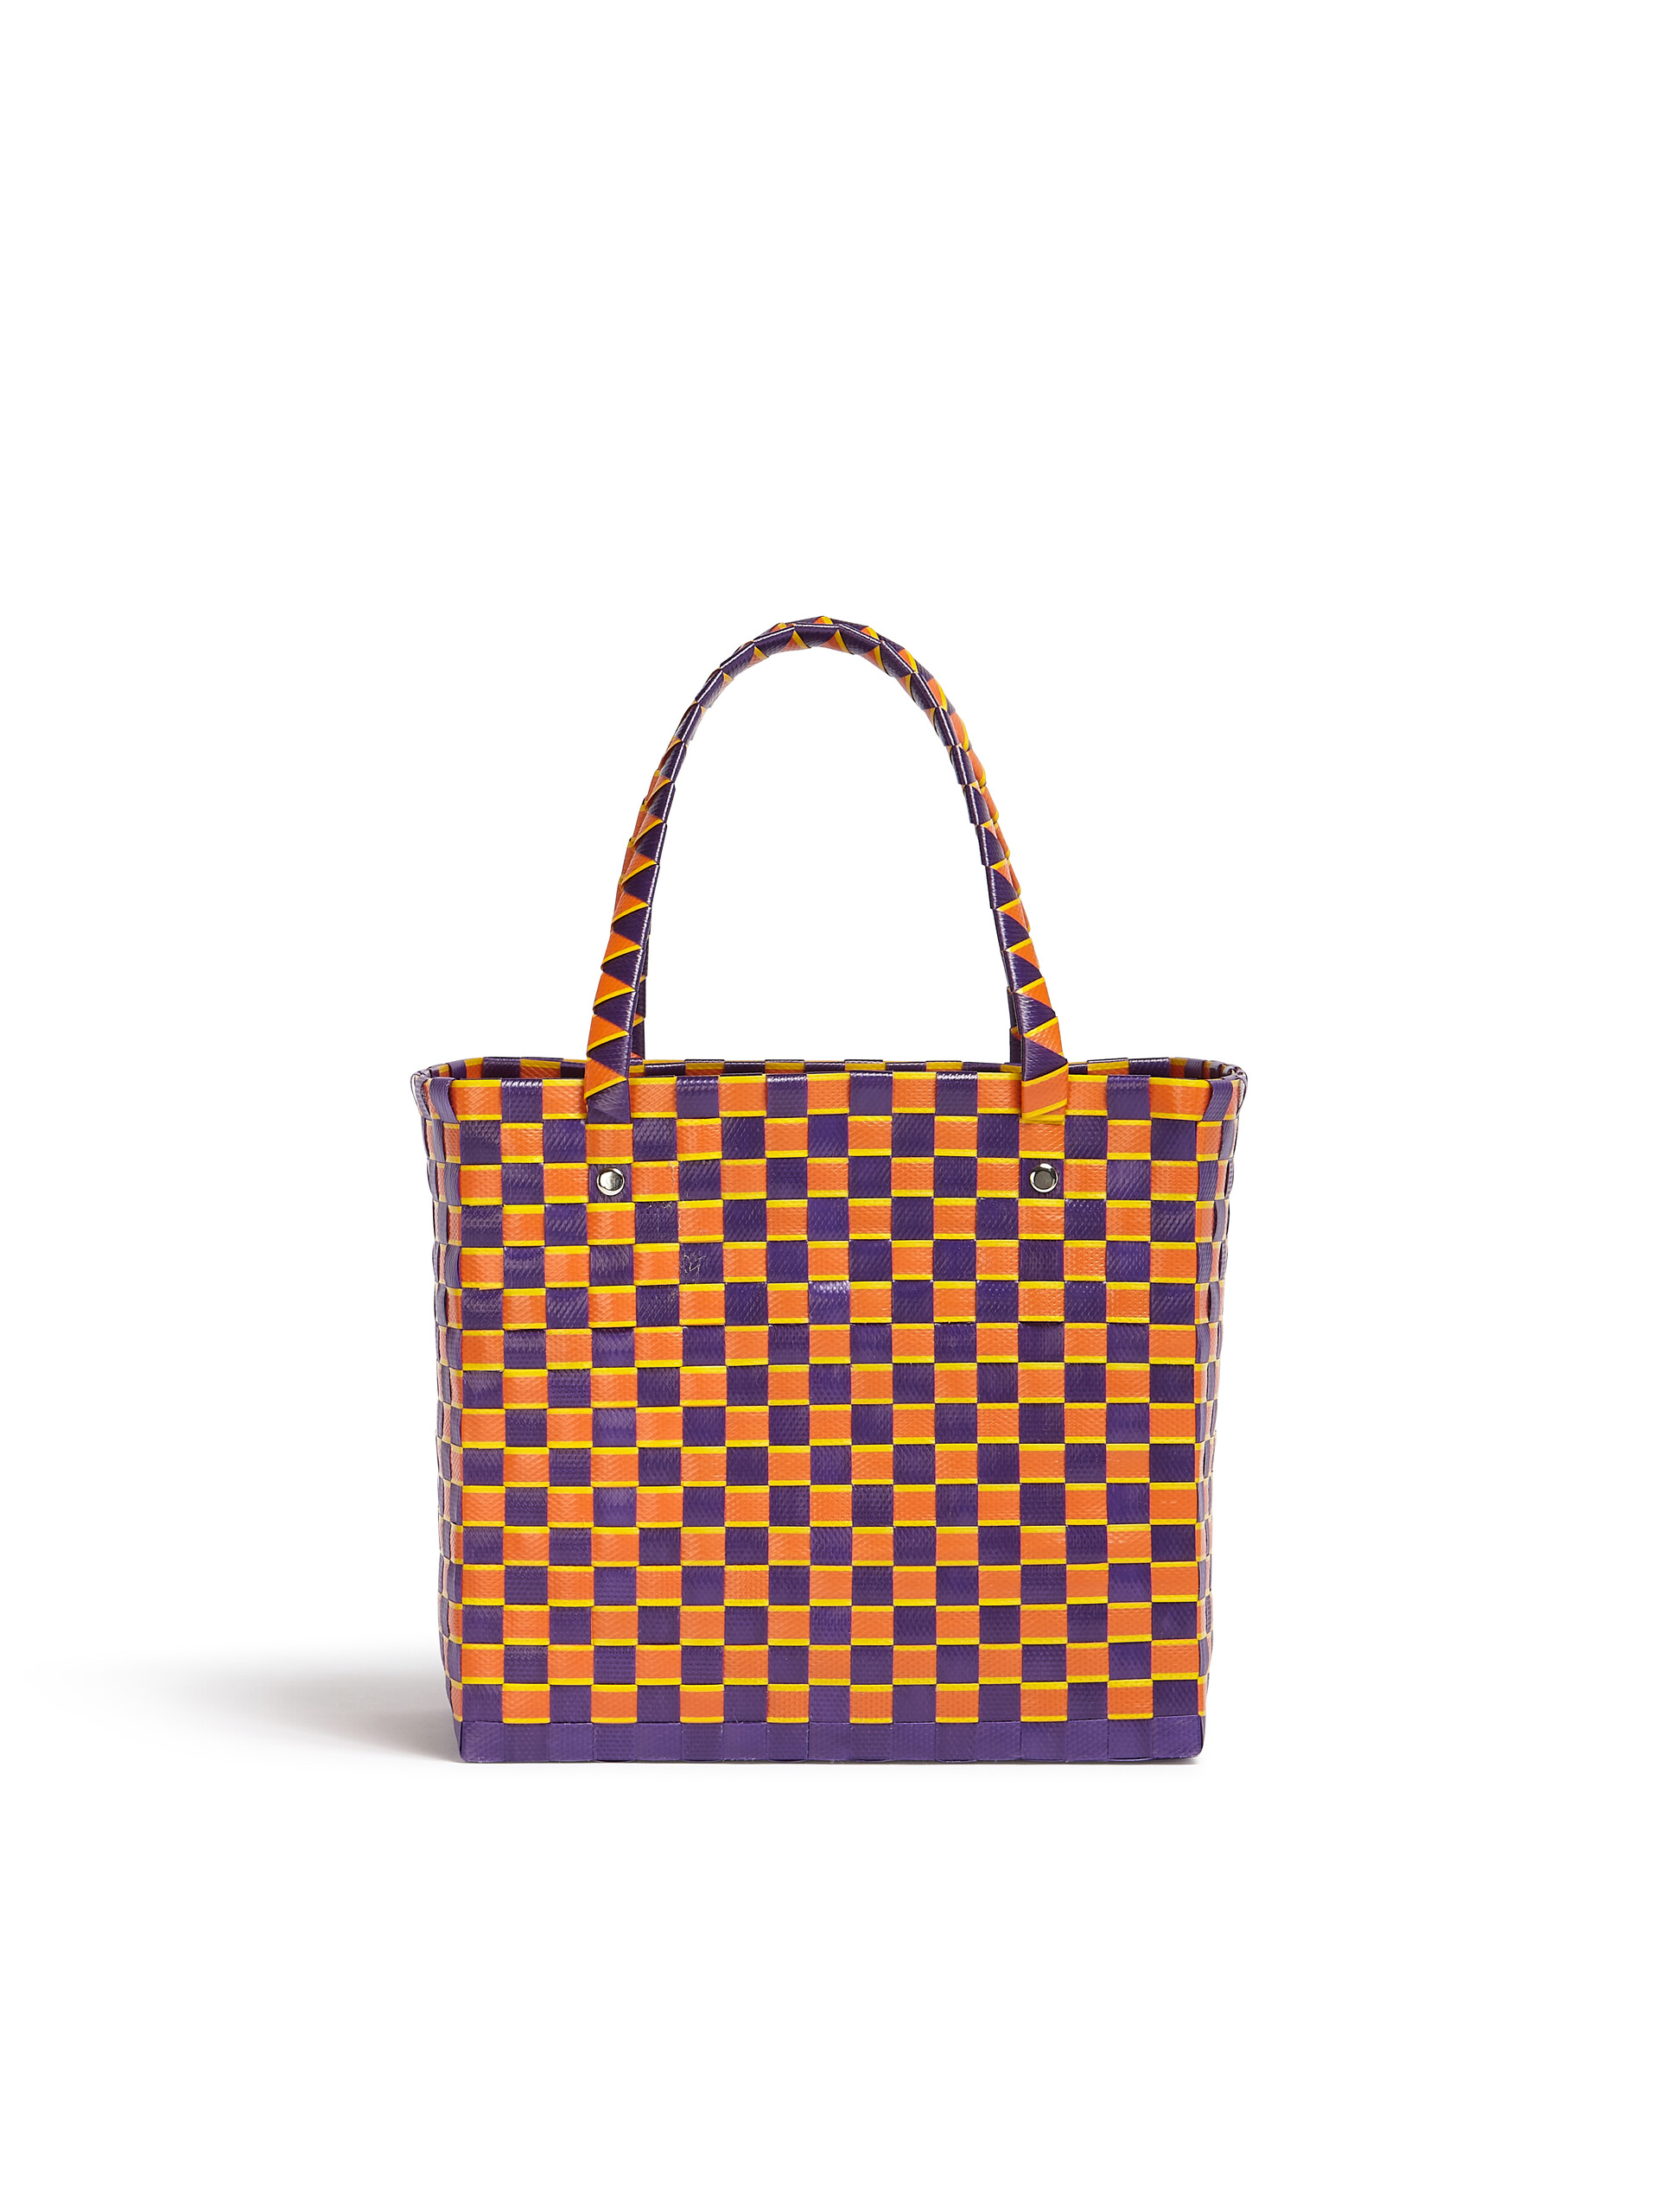 MARNI MARKET FLOWER BASKET bag in orange butterfly motif - Bags - Image 3